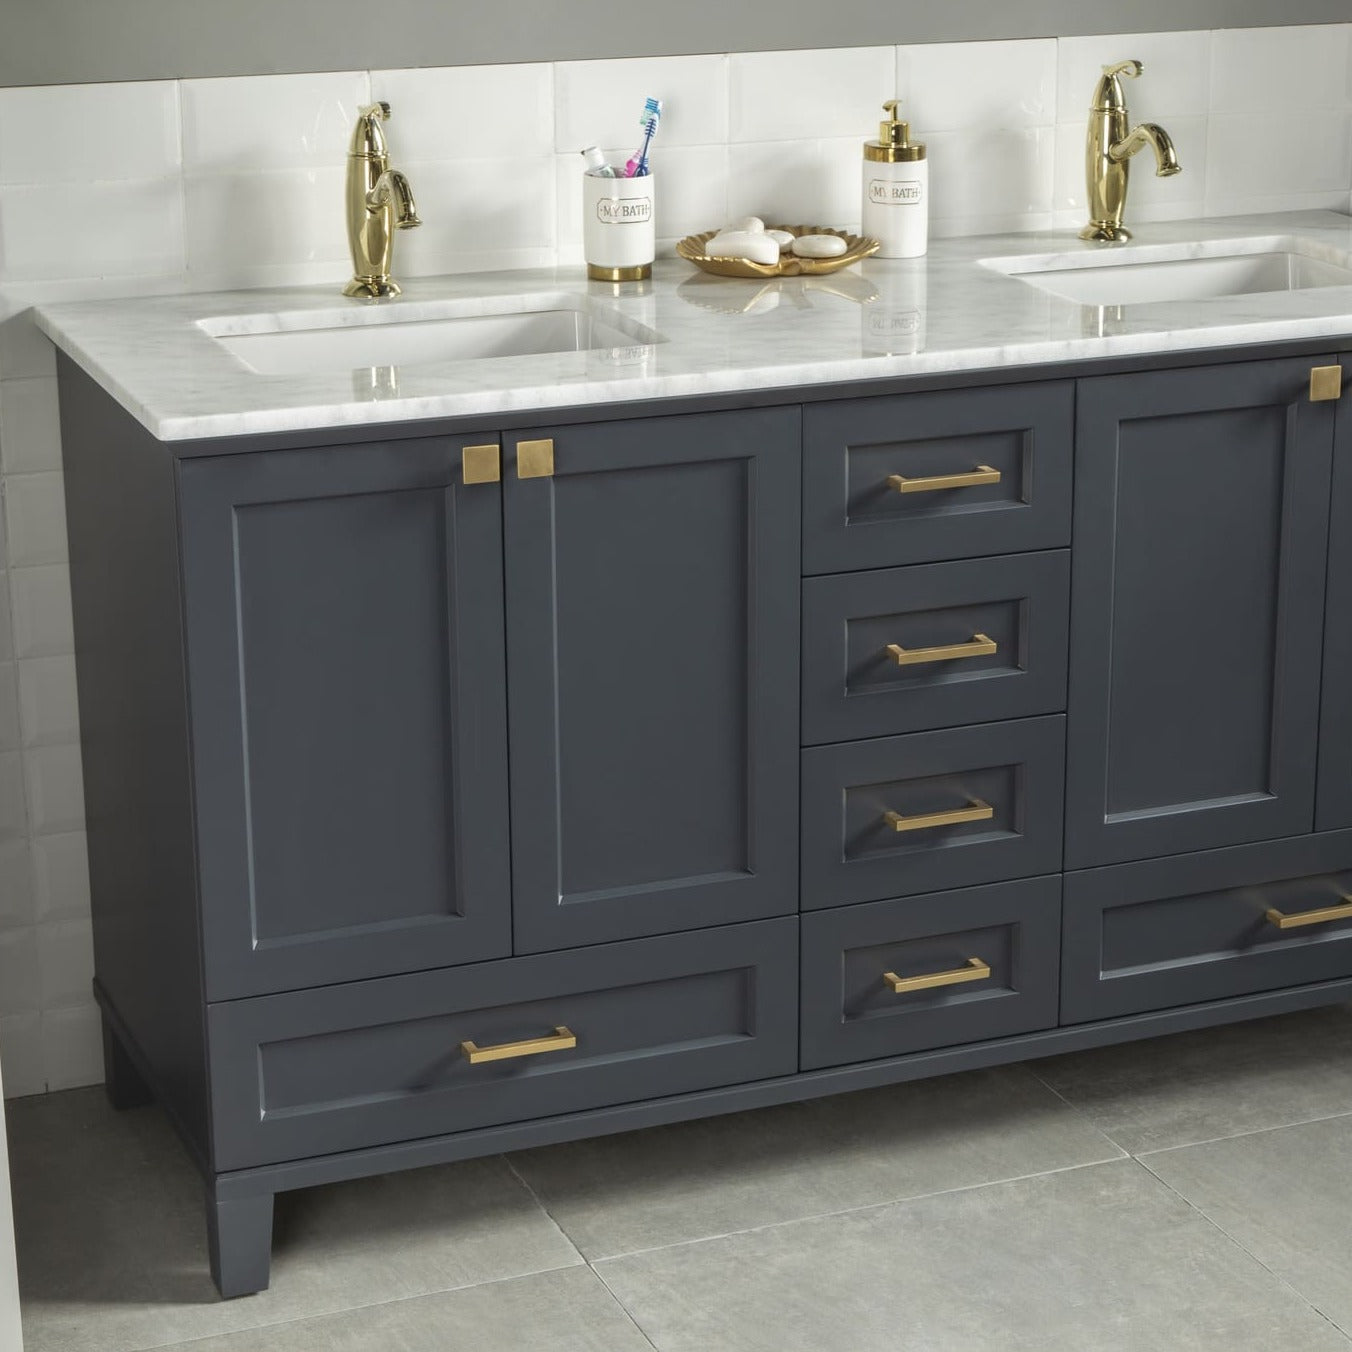 Paloma Bathroom Cabinets  Homelero 60"  #size_60"  #color_dark grey  #hardware_brass